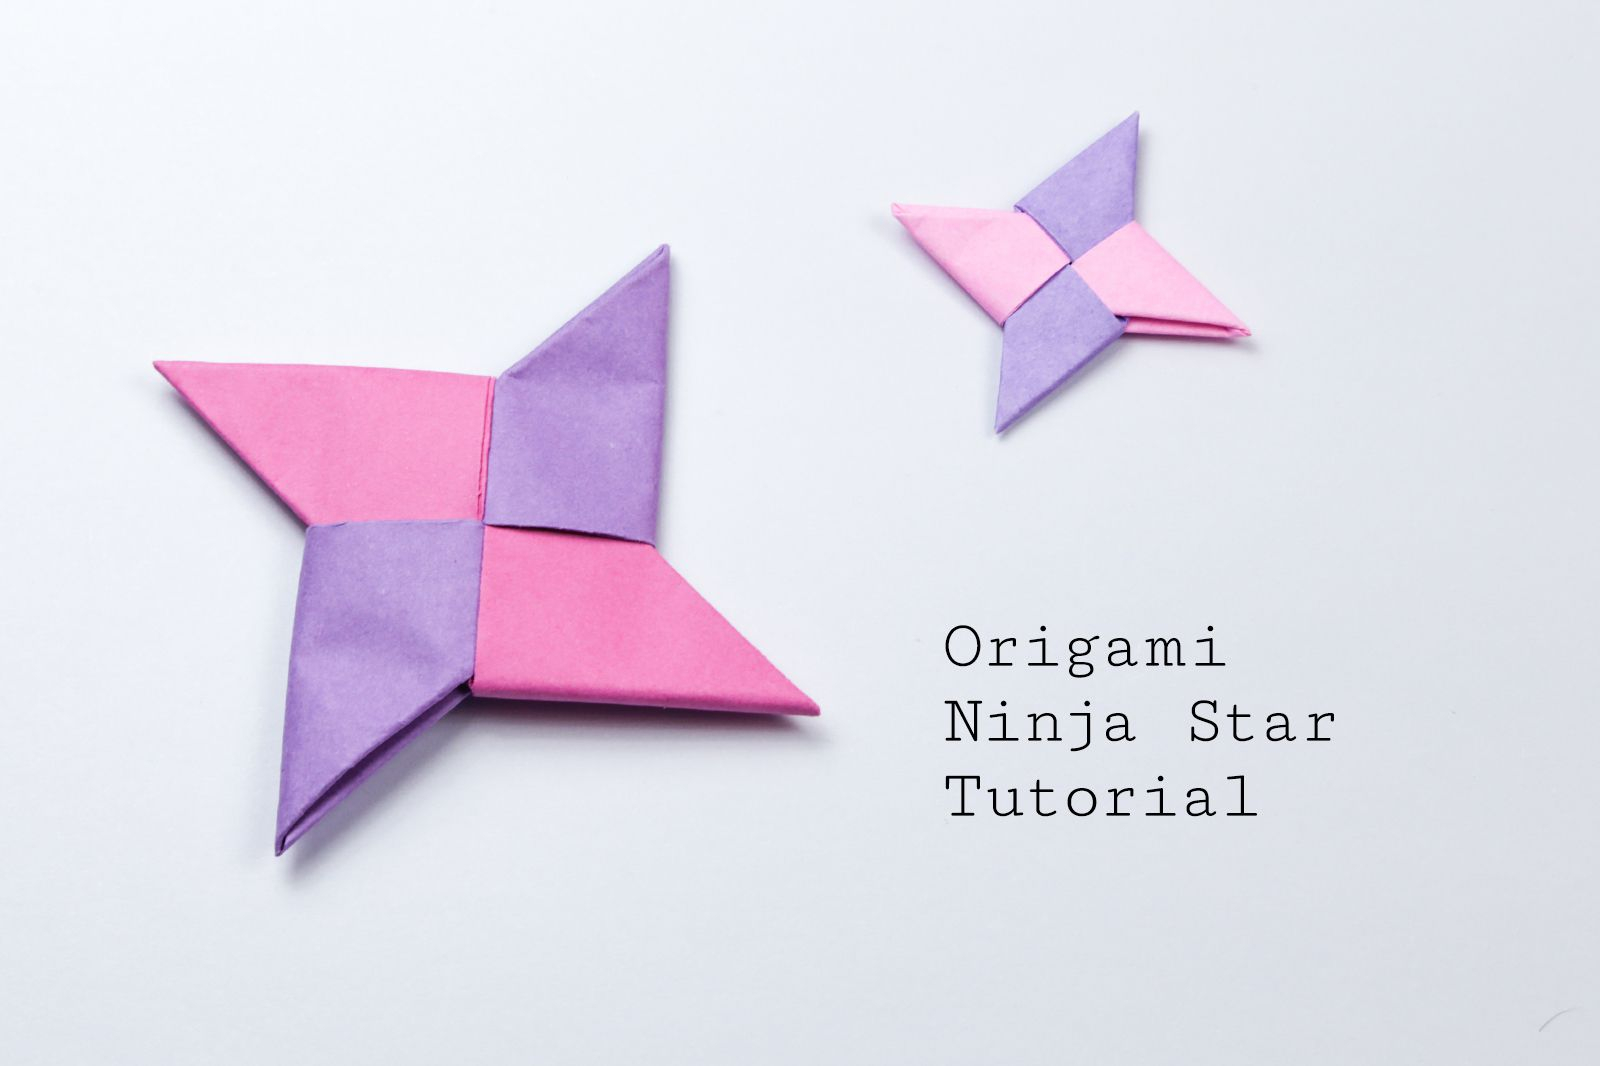 Origami Ninja Stars Origami Ninja Star Tutorial